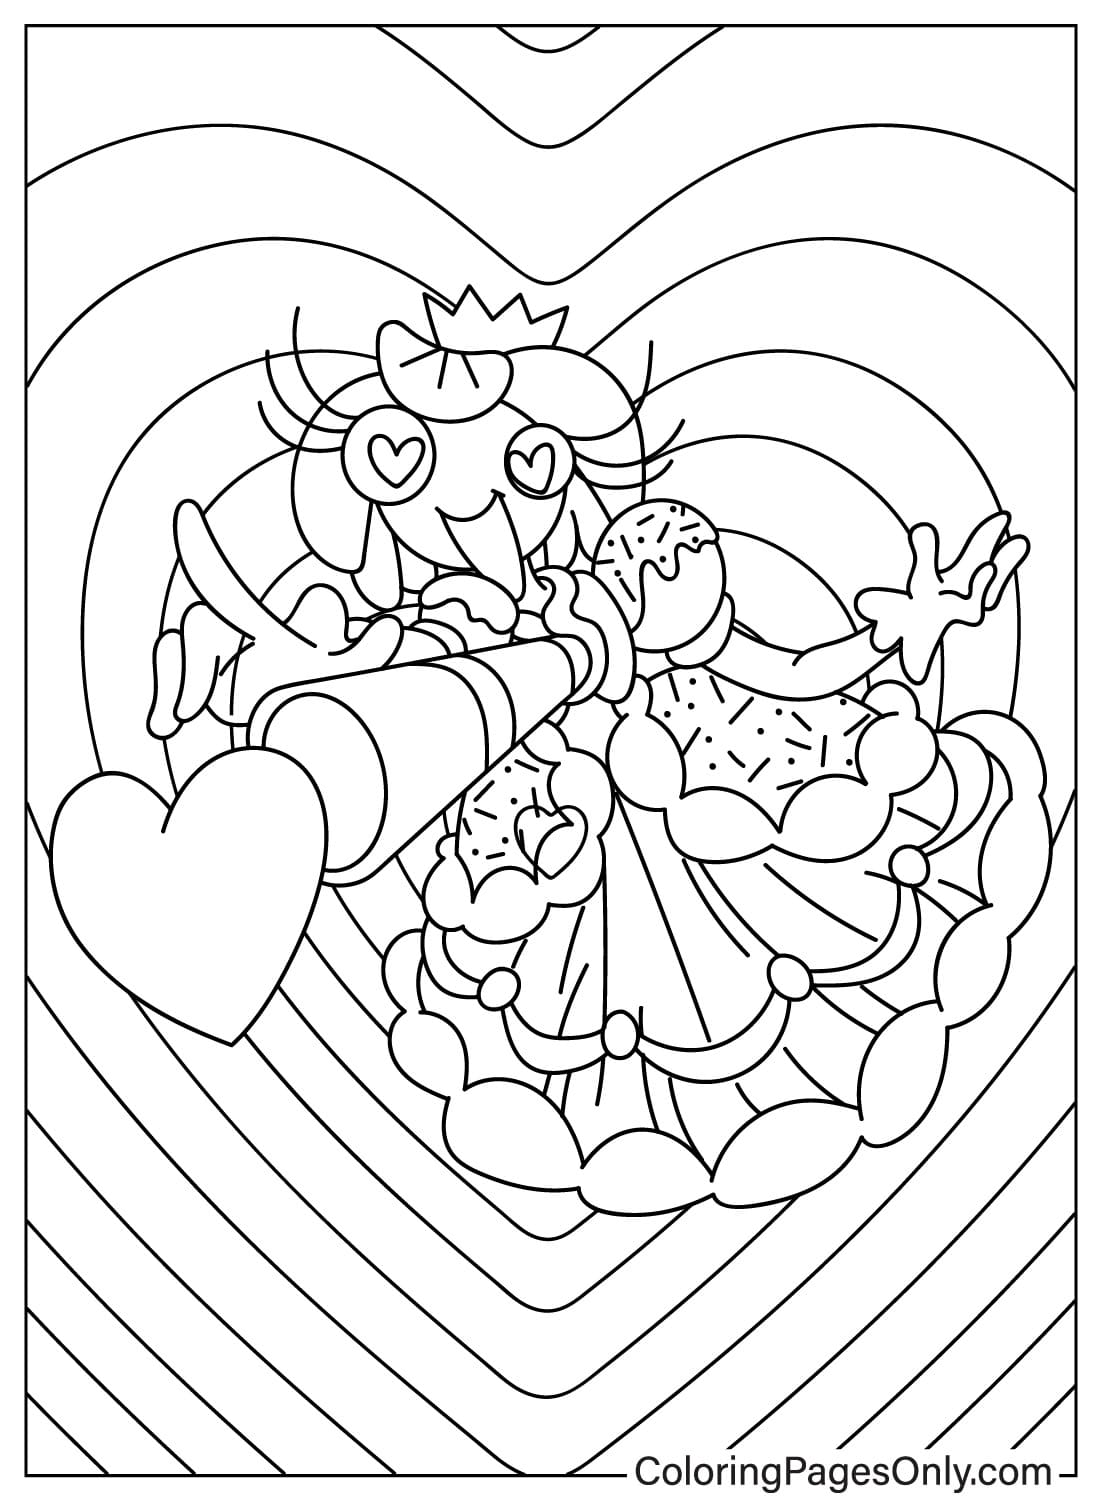 Princess Loolilalu with Heart Coloring Page from Princess Loolilalu